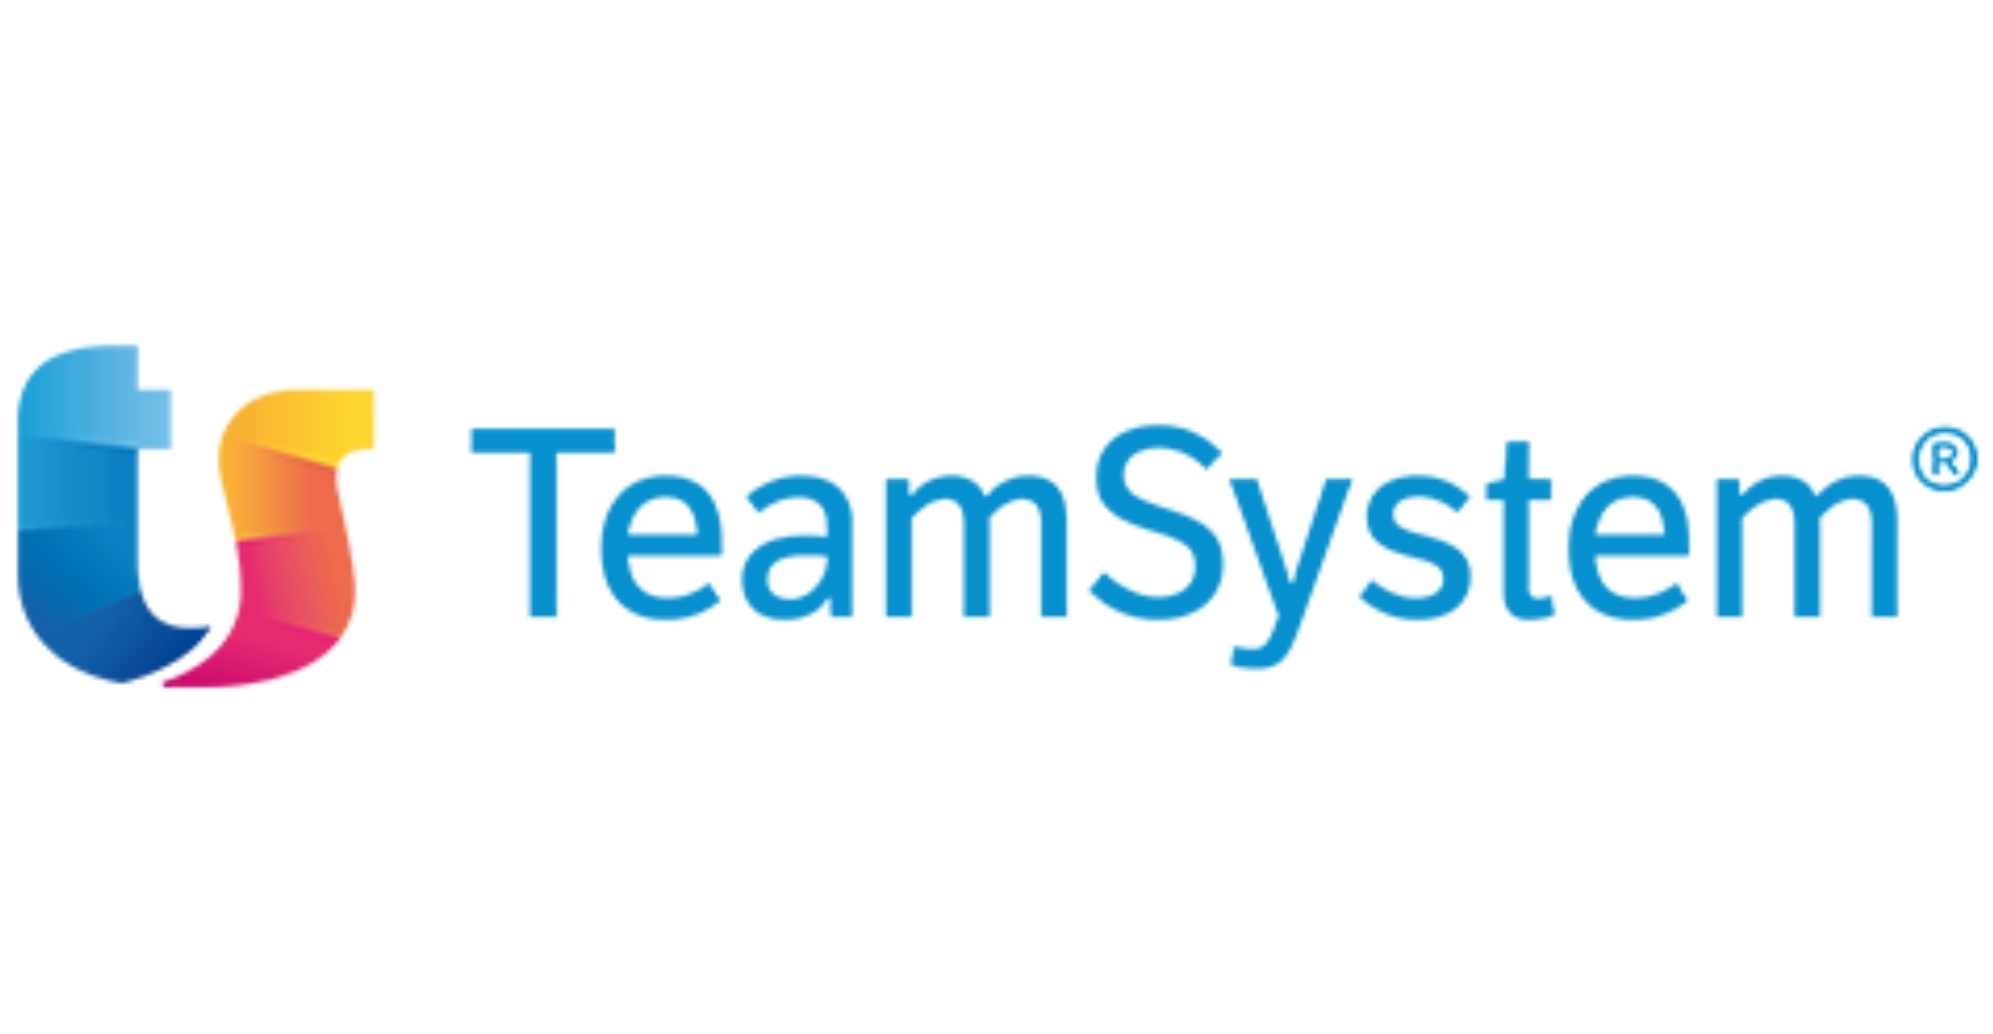 TeamSystem